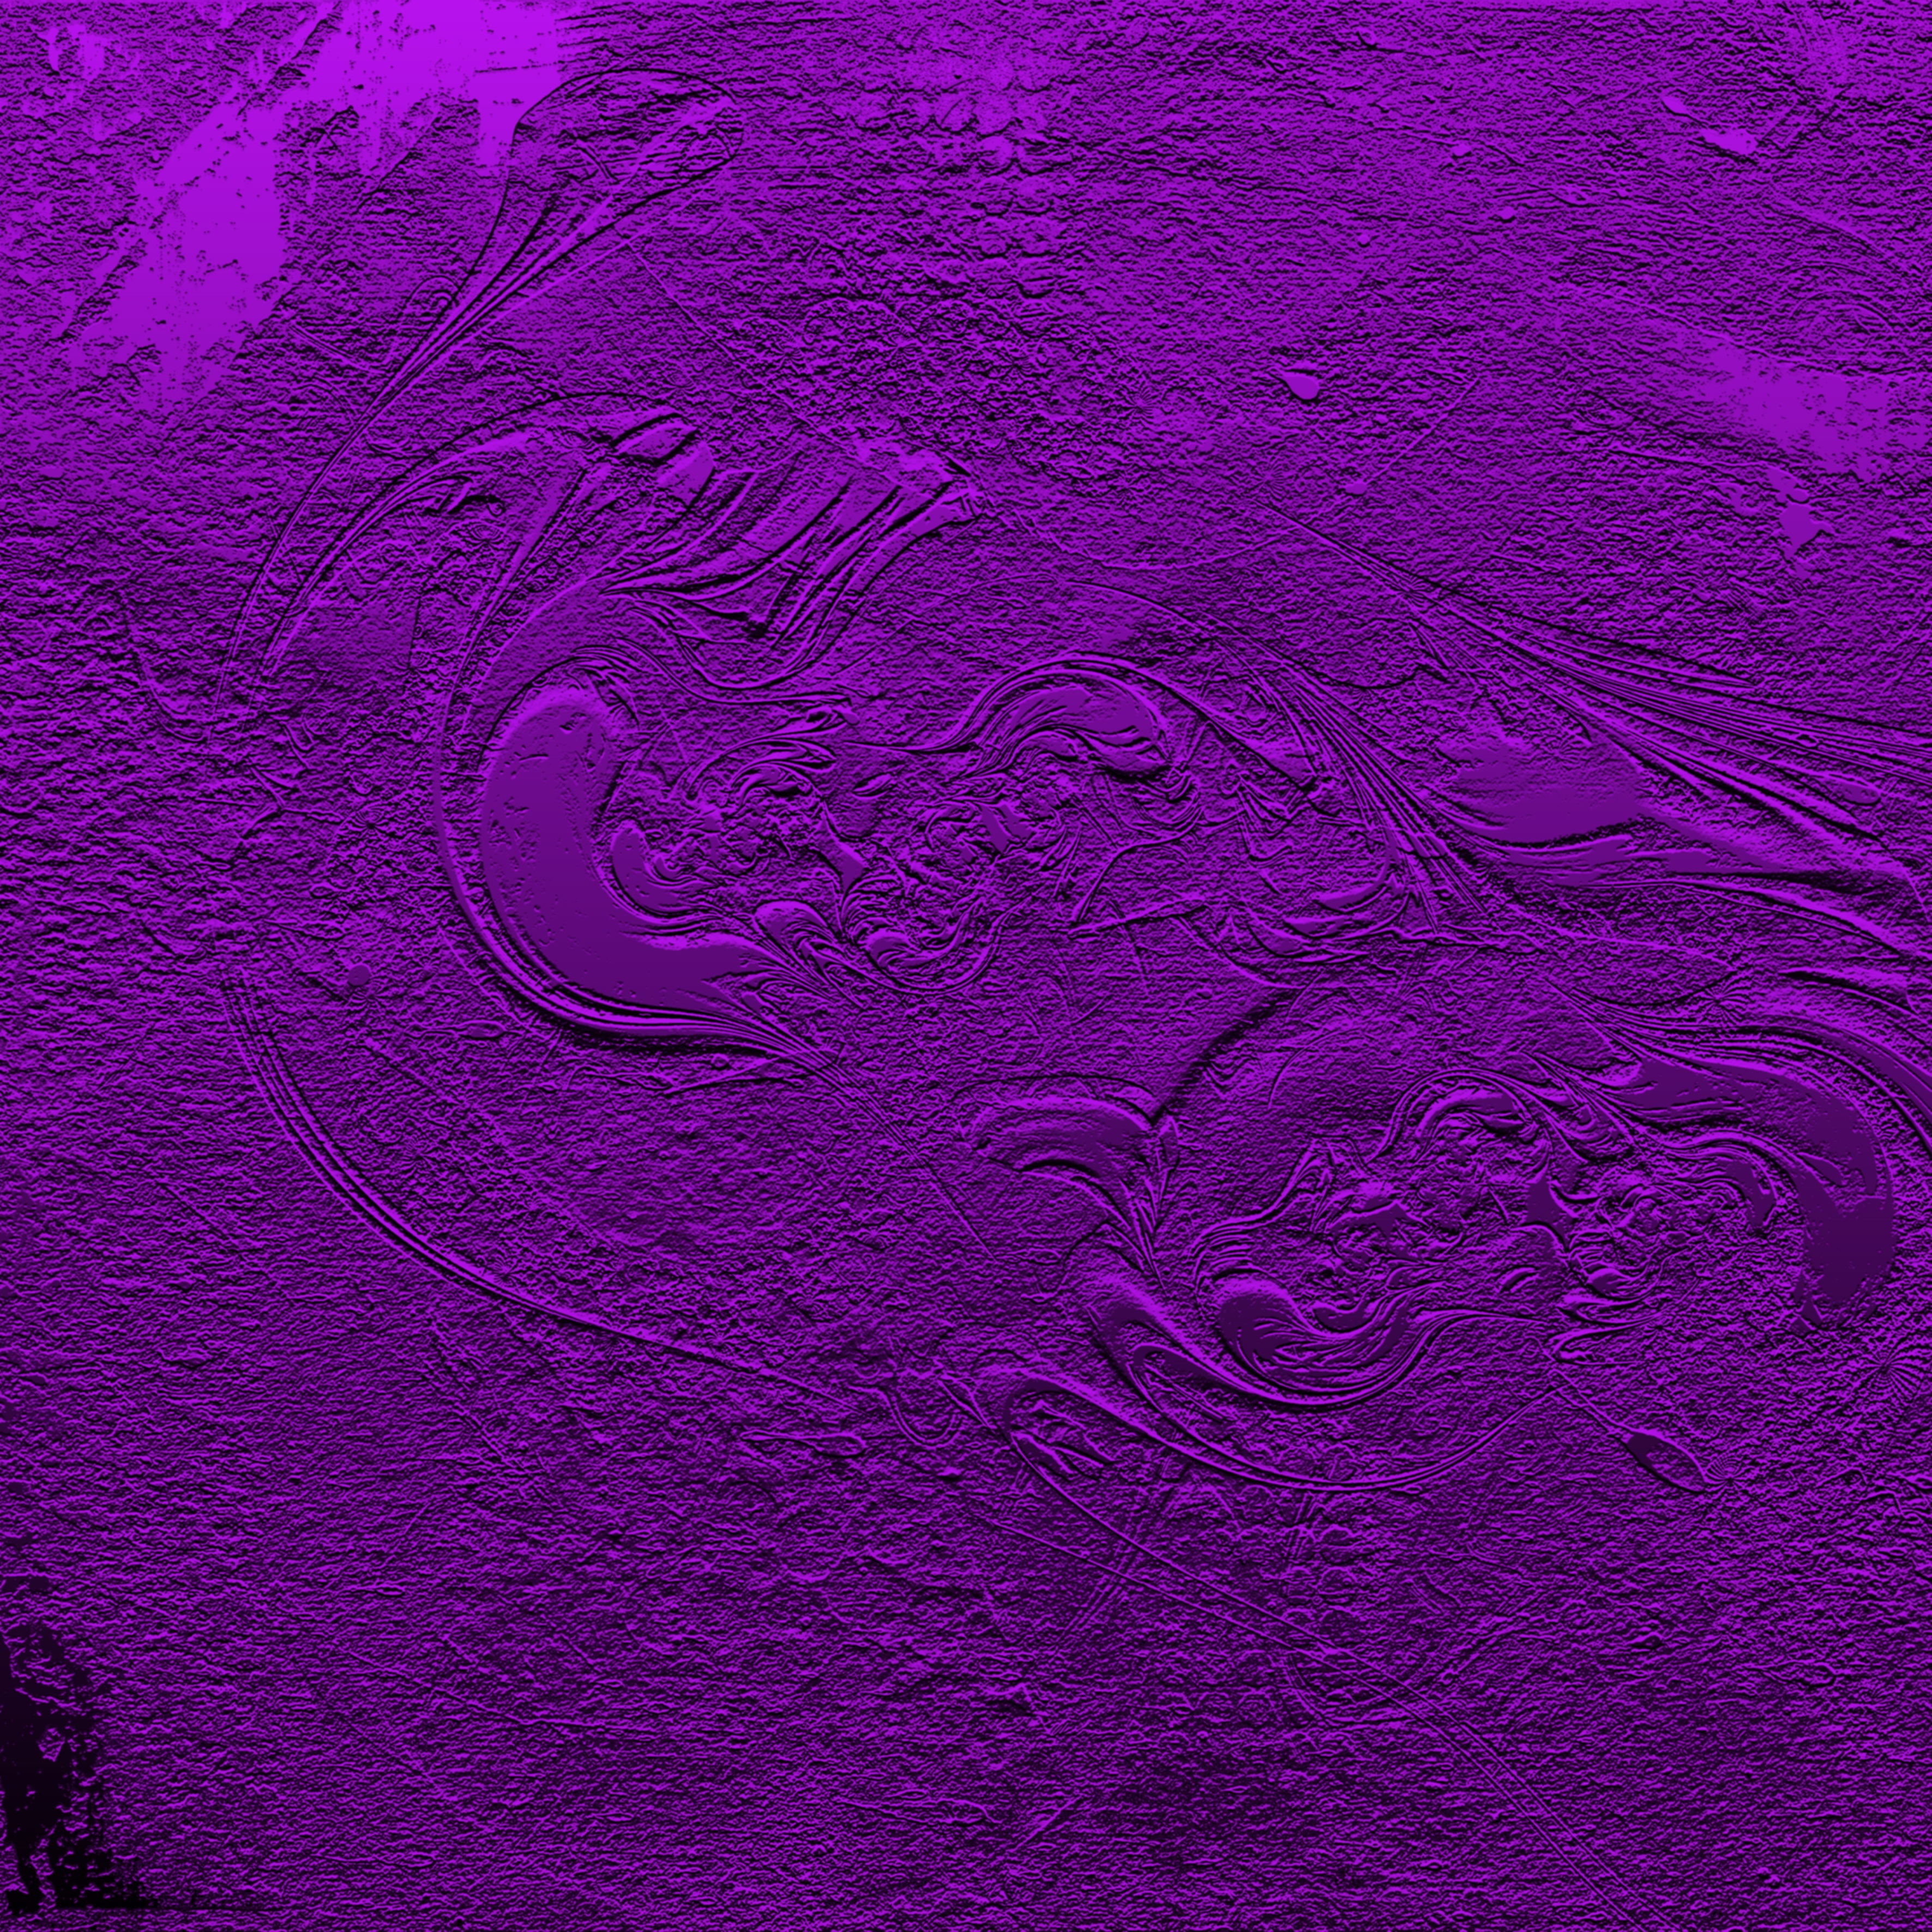 textures, violet, patterns, texture, irregularities, purple cellphone